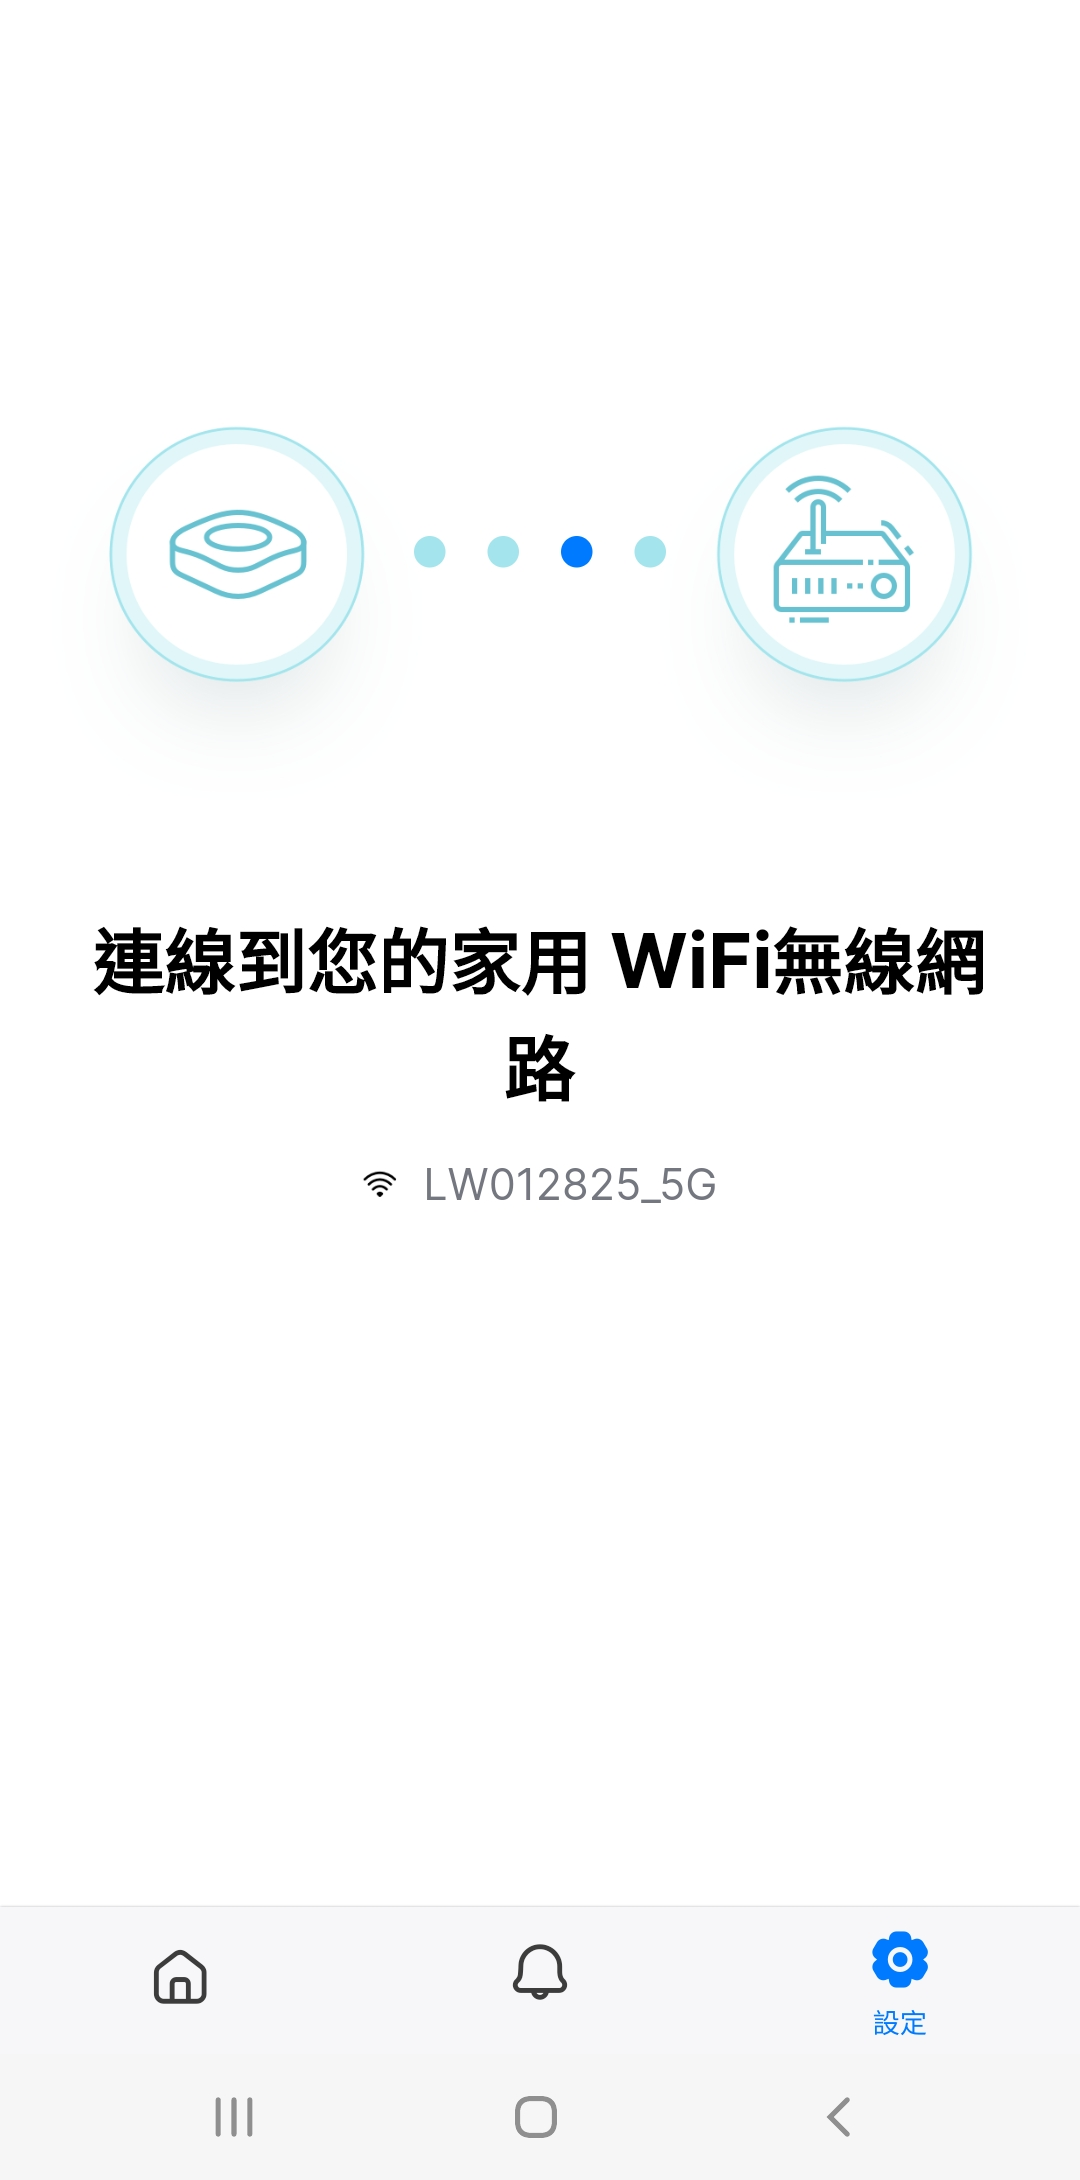 WiFi_C7.png